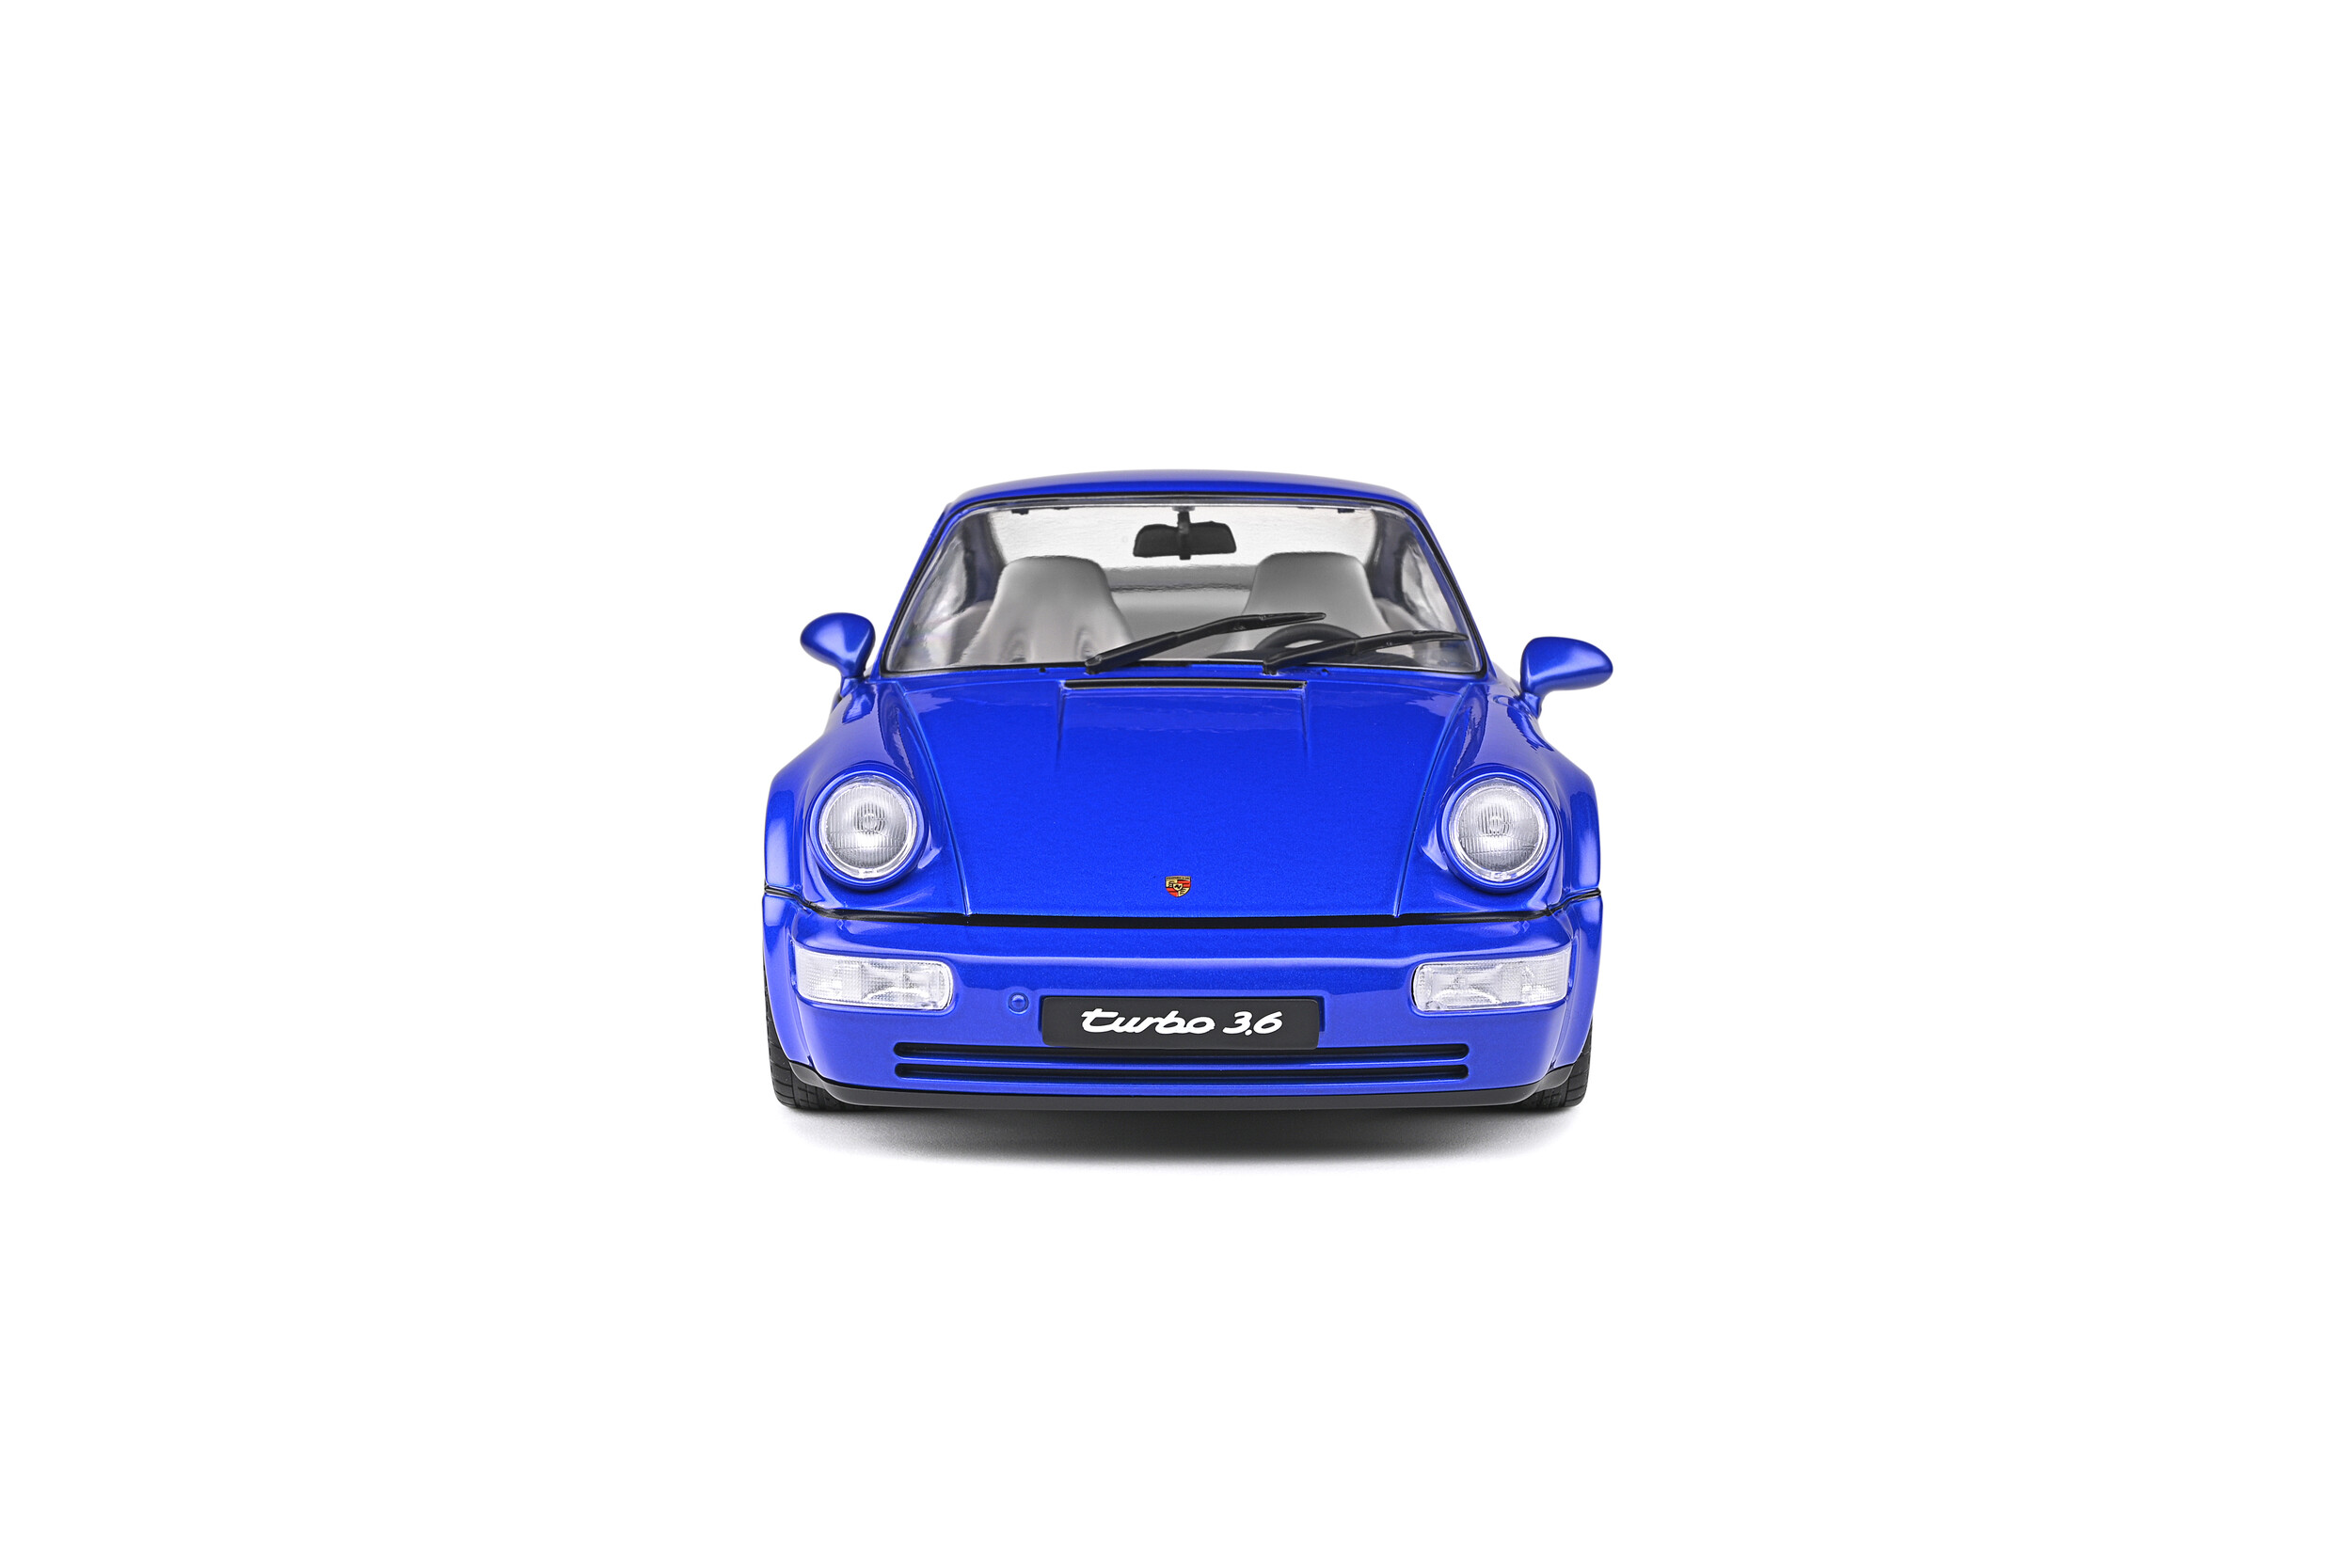 Porsche 911 (964) Turbo 3.6 - Electric Blue - 1990 - Solido